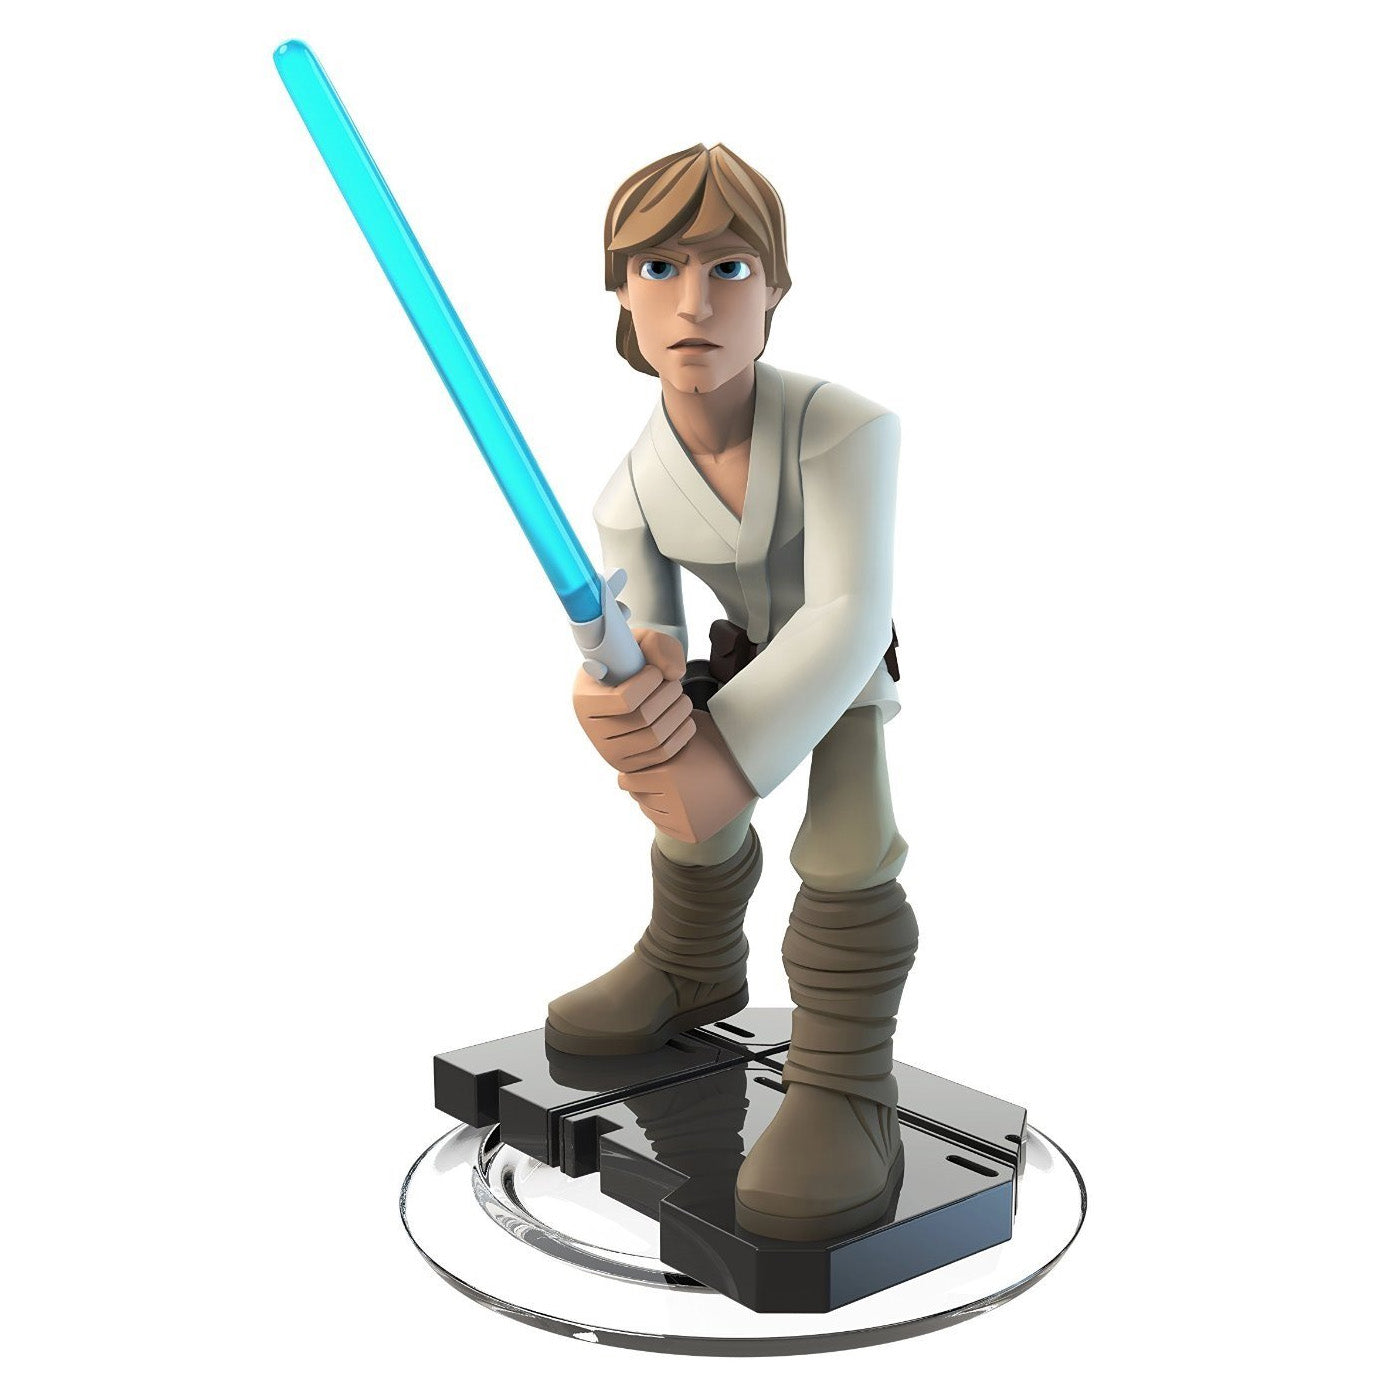 Disney Infinity 3.0 Character: Luke Skywalker